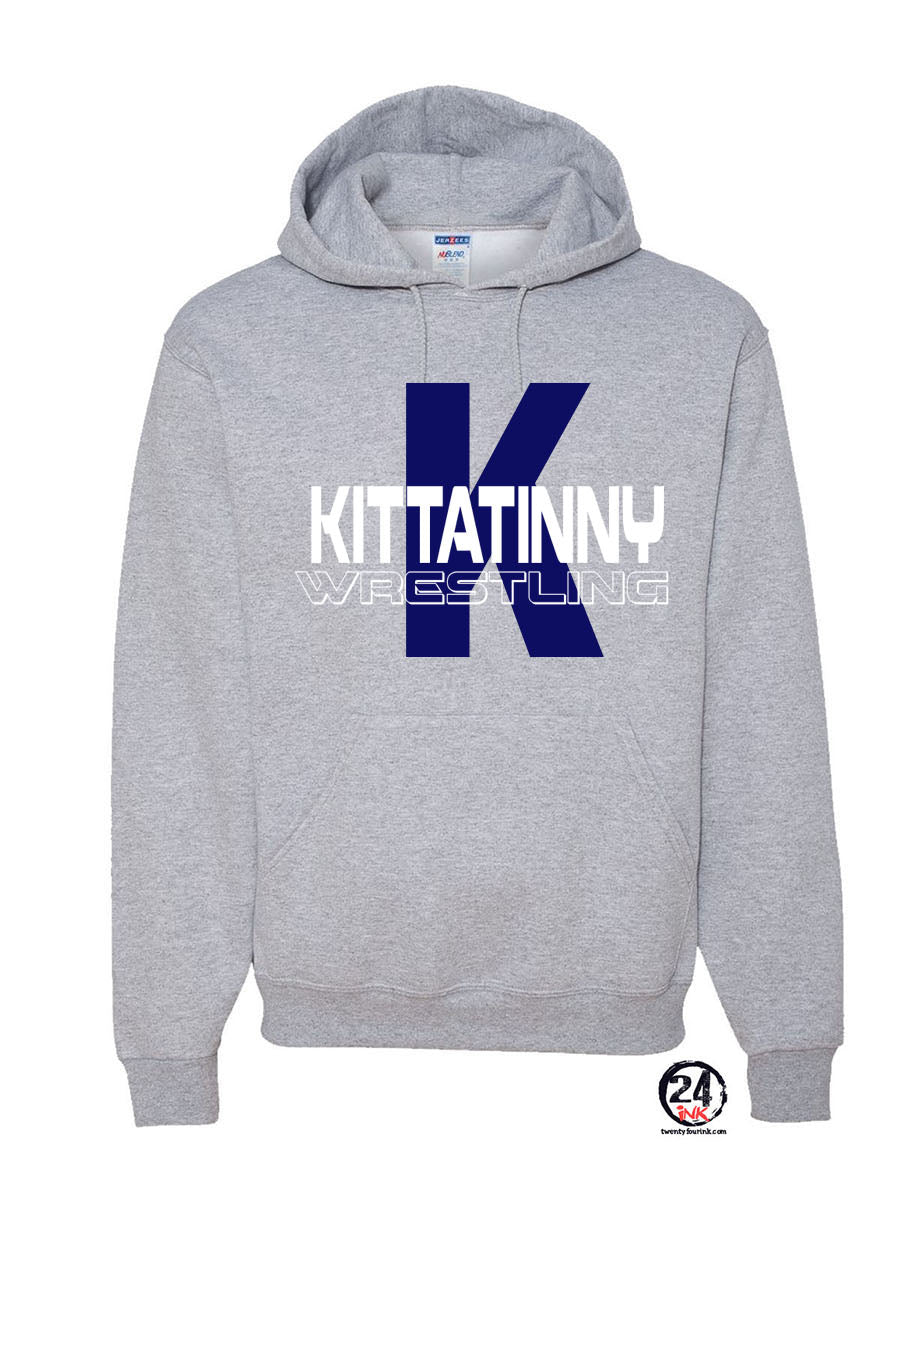 Kittatinny Wrestling Design 5 Hooded Sweatshirt